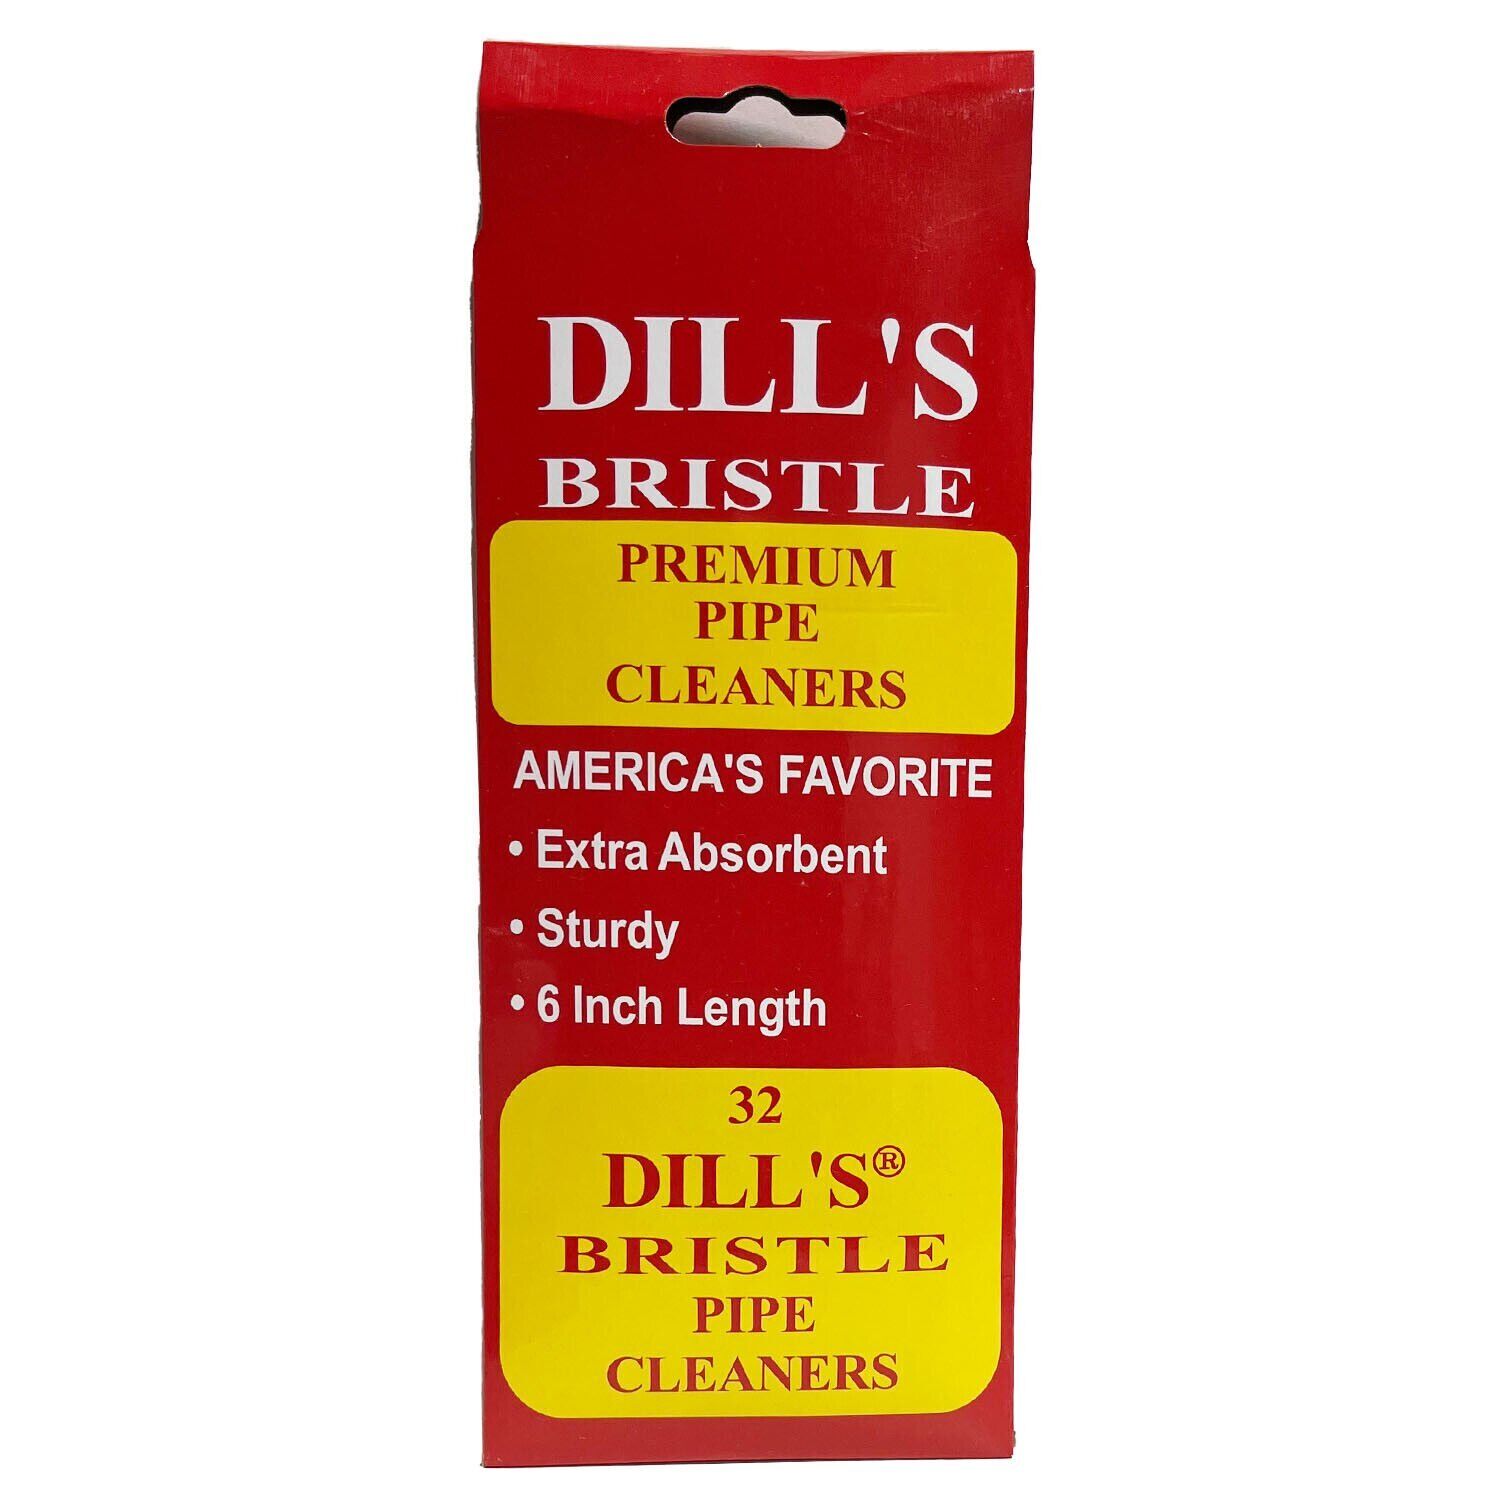 Dill's Bristle Premium Pipe Cleaners 32 Count